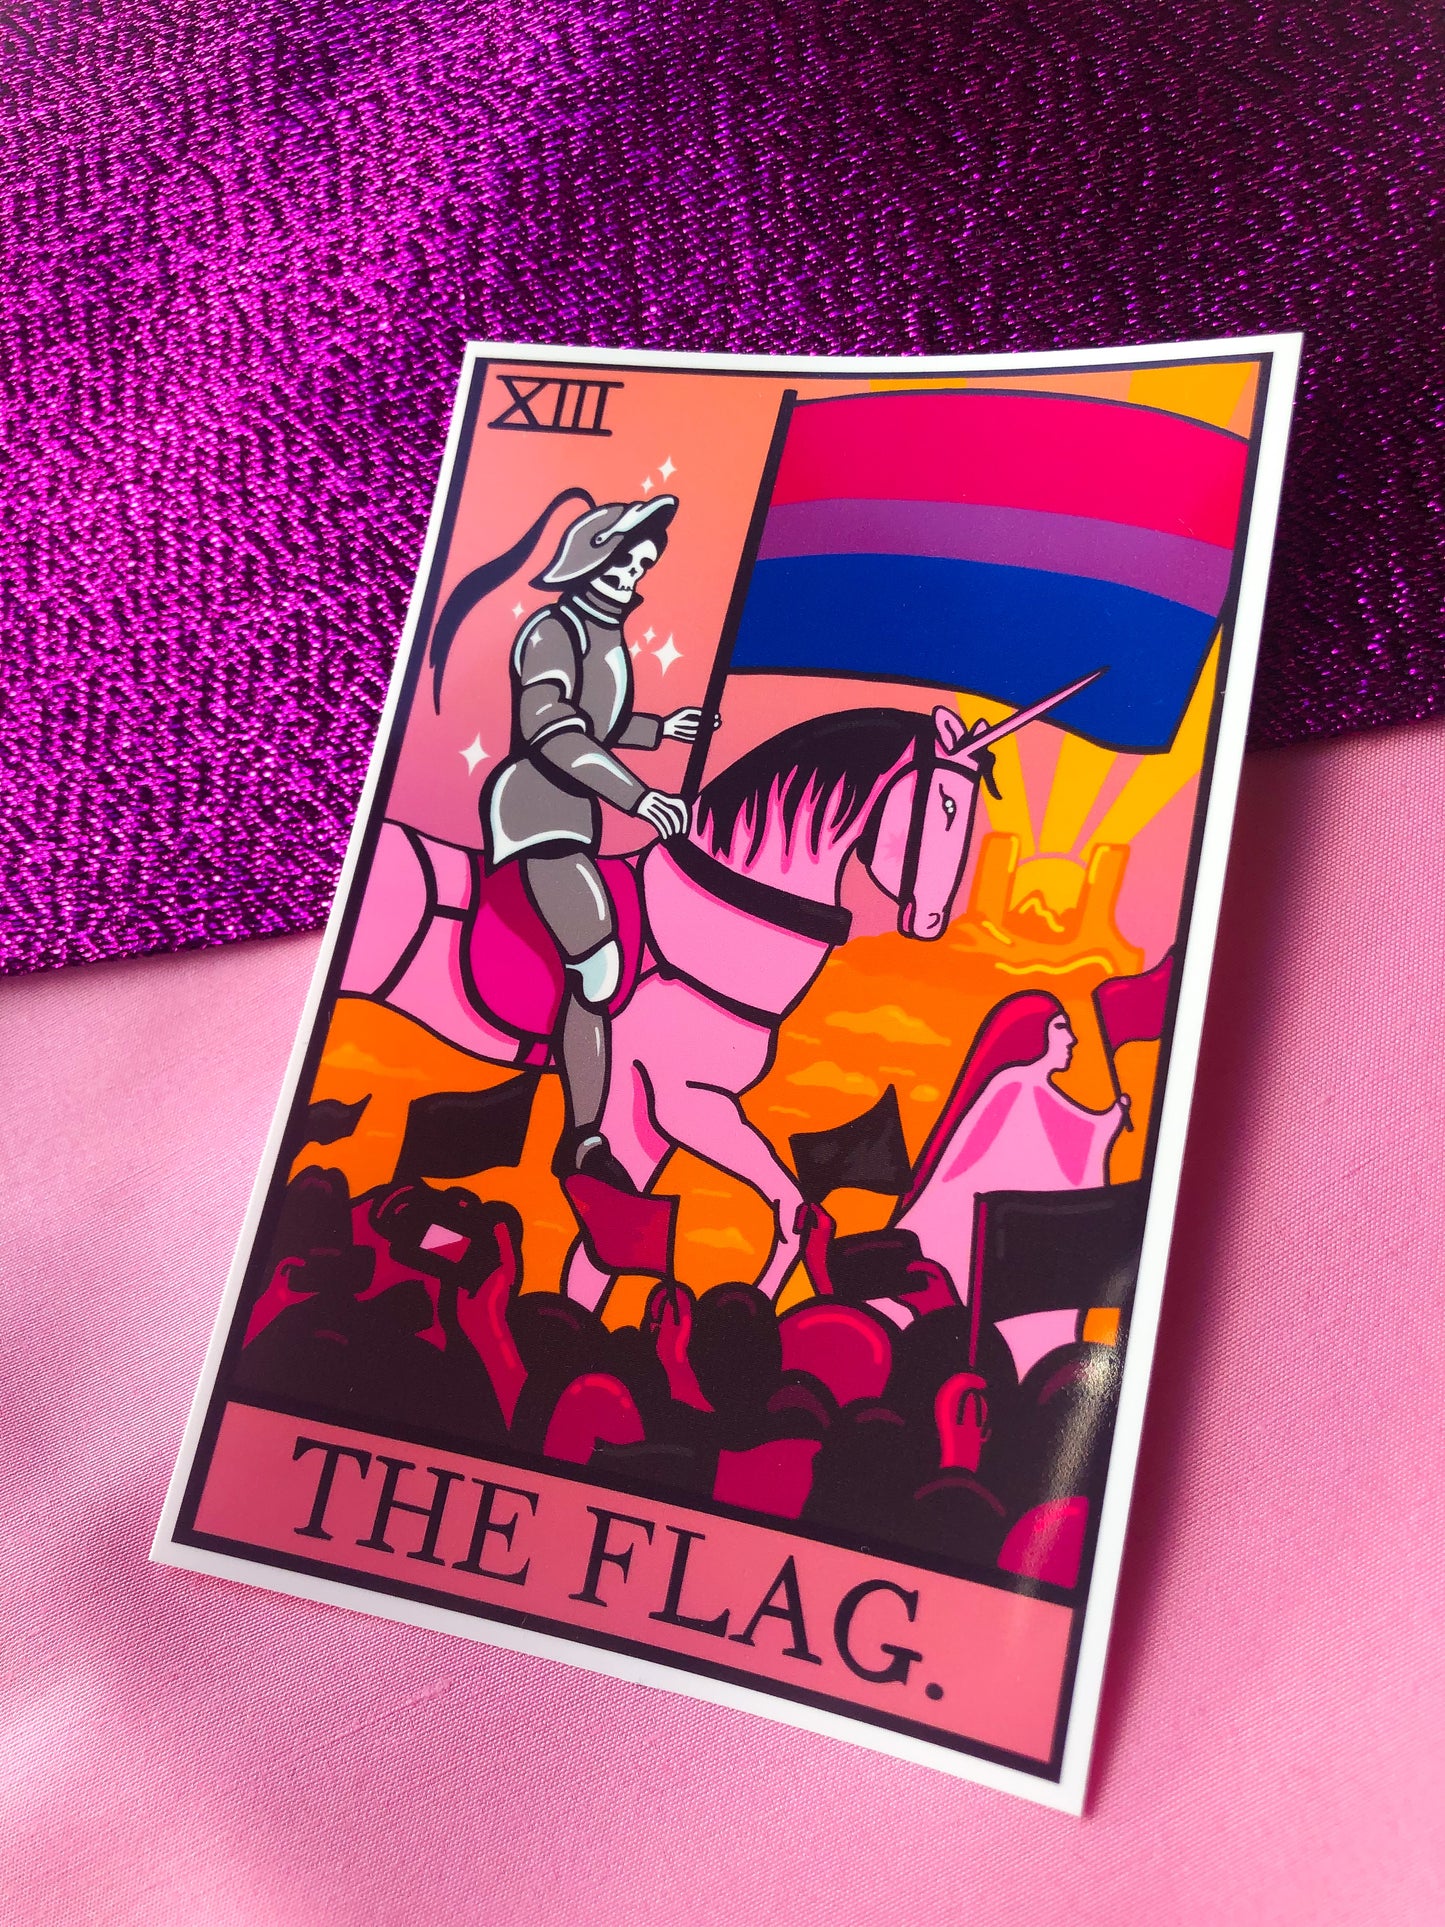 Bisexual pride flag tarot card sticker.